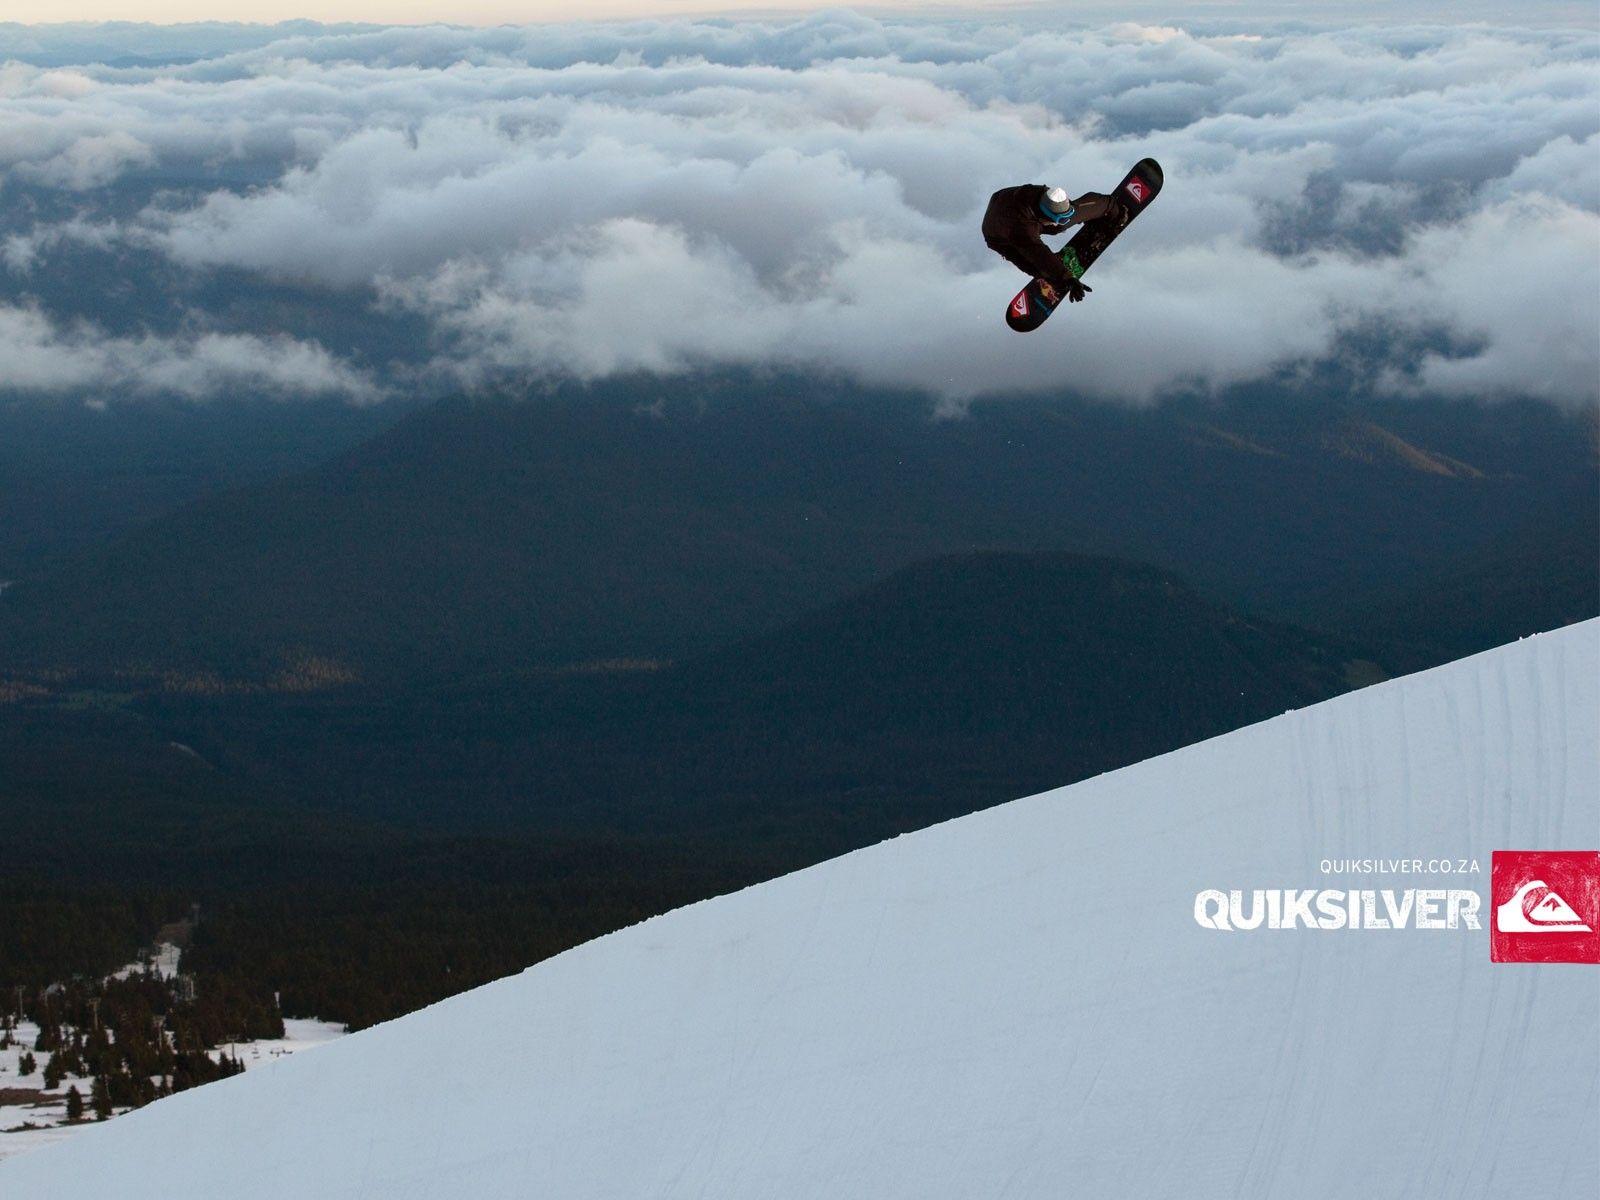 Quiksilver Snowboarding Wallpaper 5519 1600x1200 px